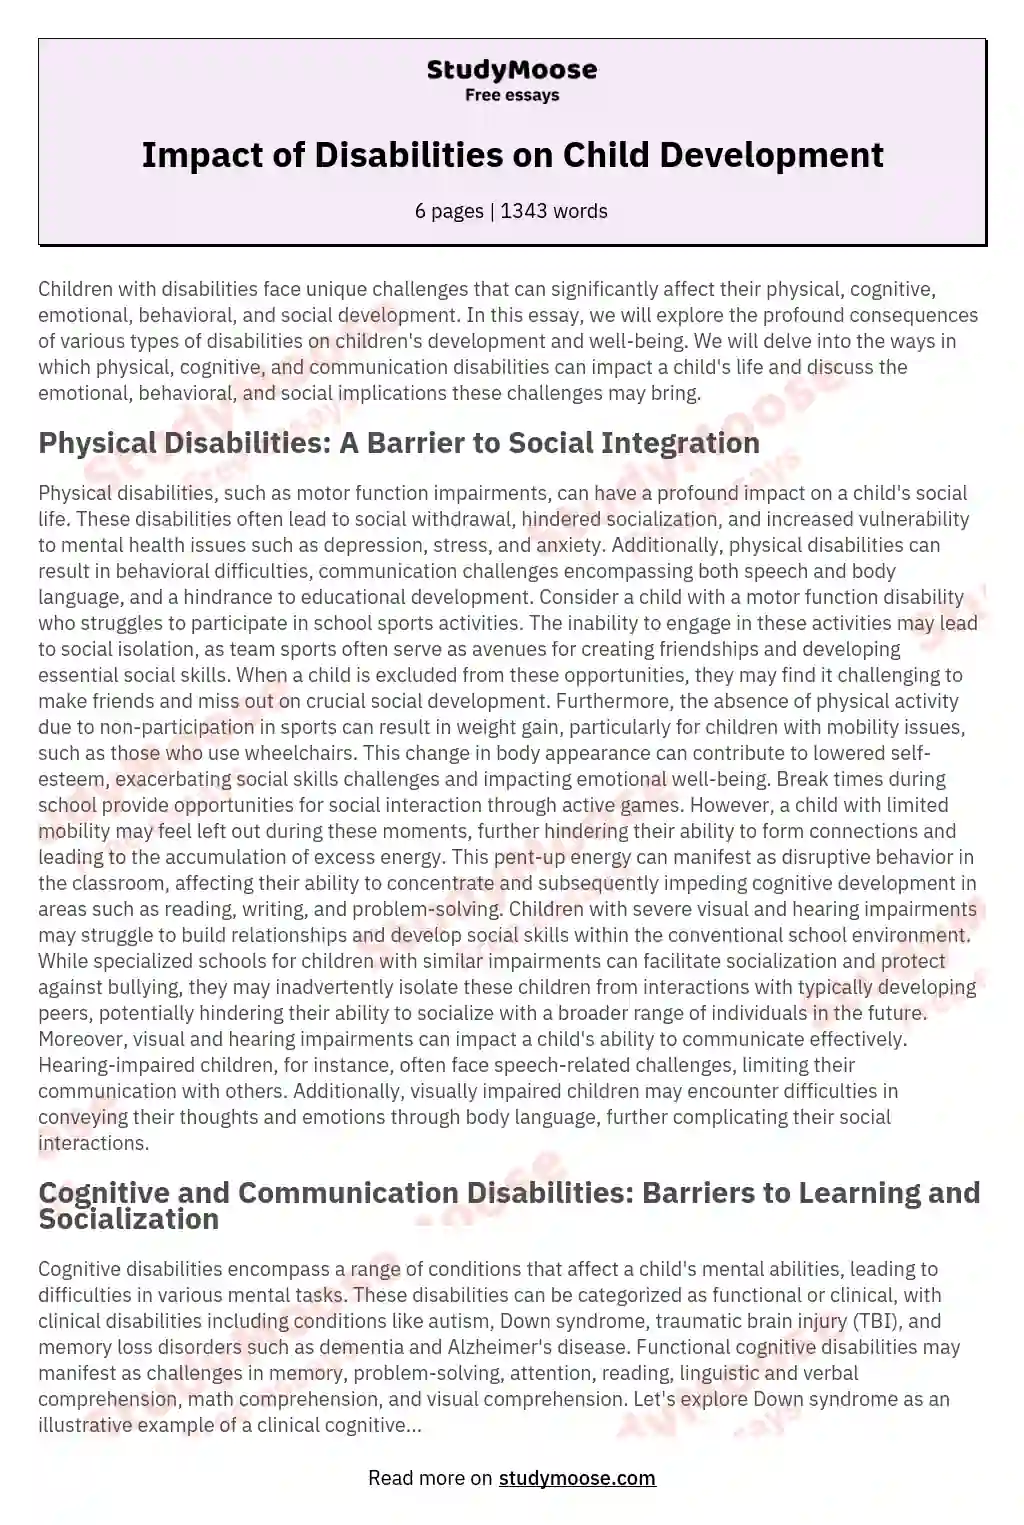 Impact of Disabilities on Child Development essay